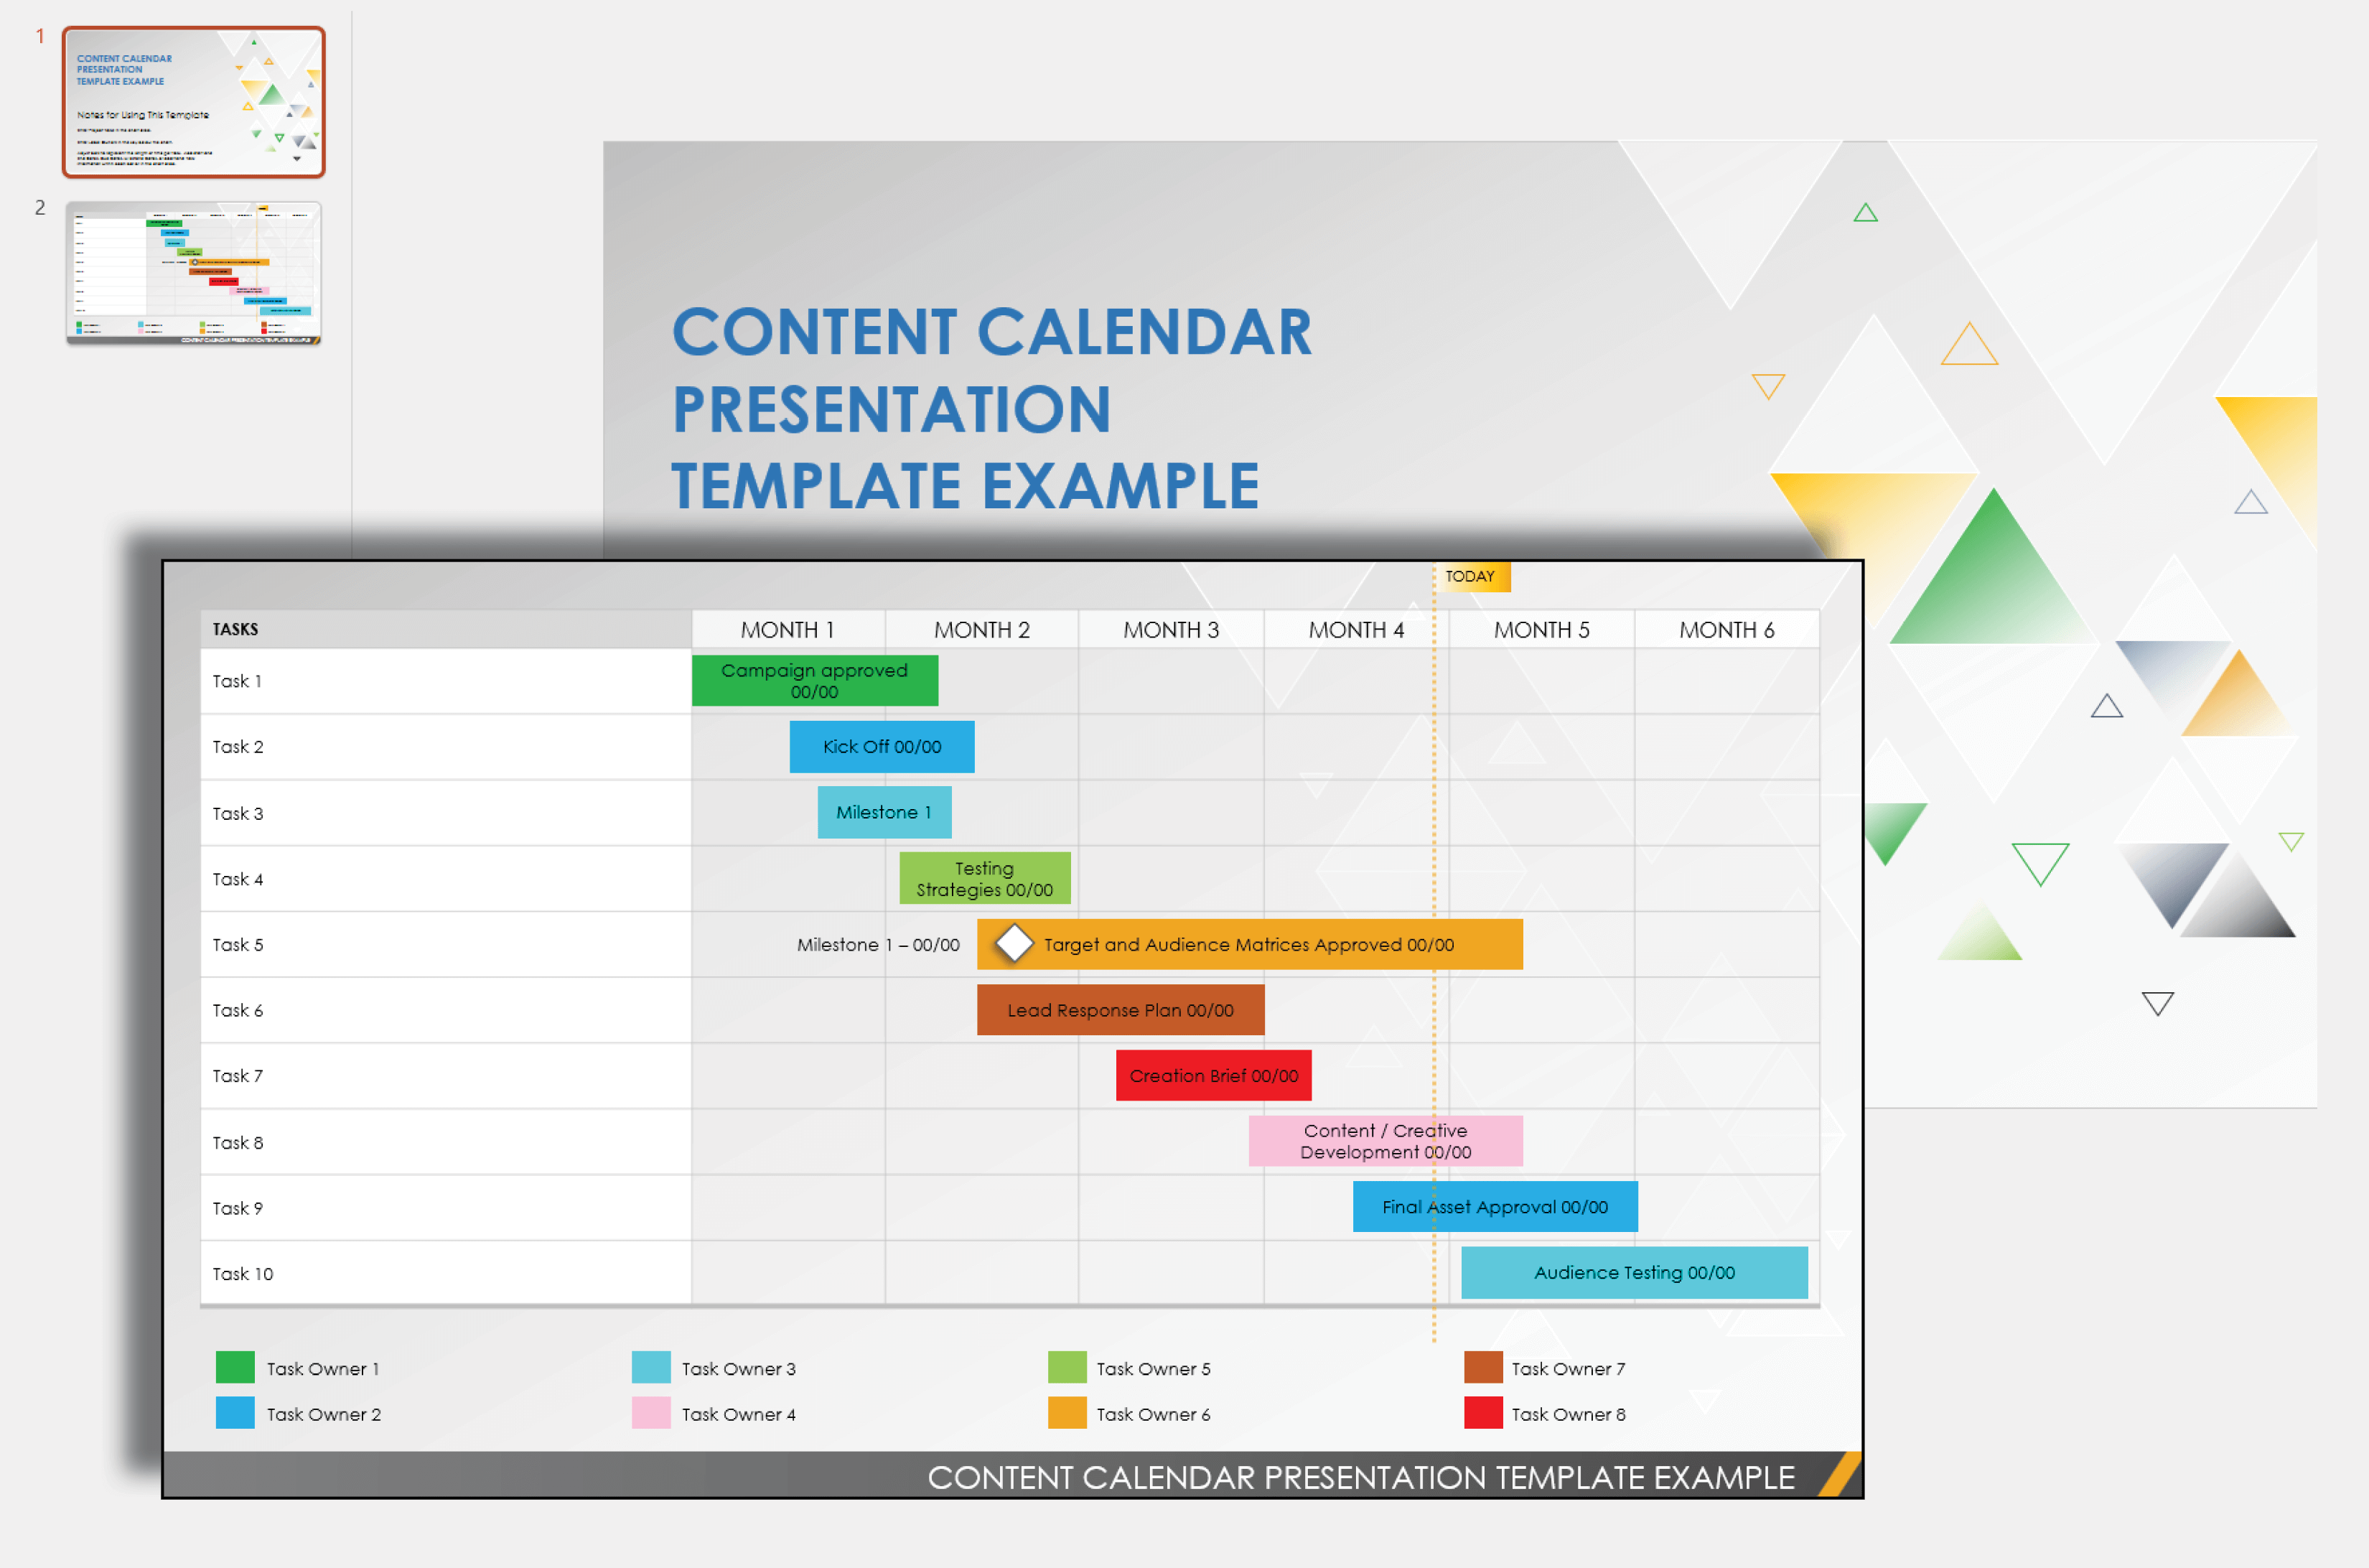 Content Calendar Presentation Example Template